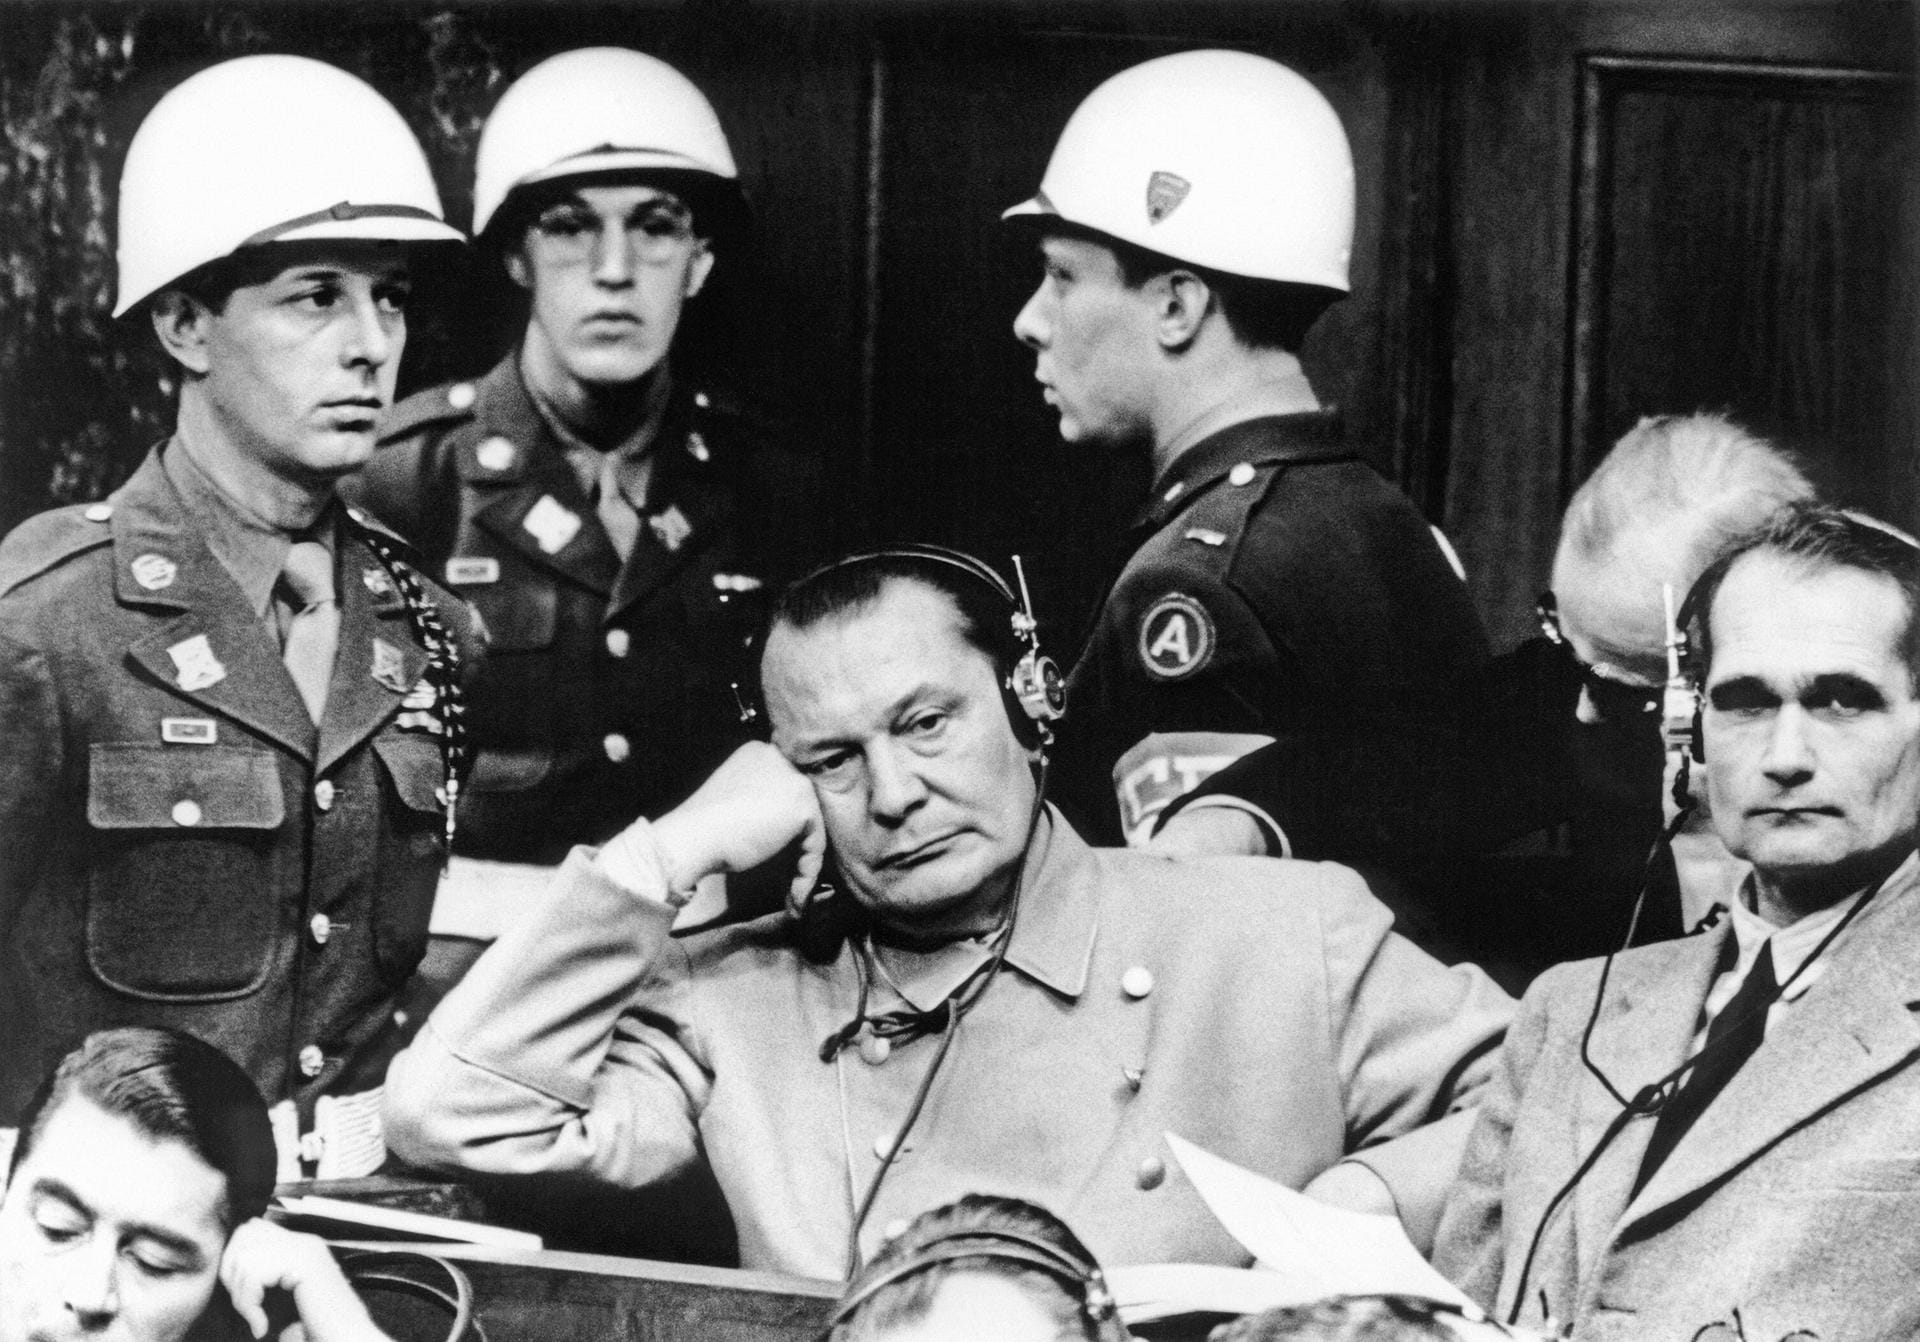 GERMANY Reichsmarschall Hermann Göring C and Hitler s deputy leader Rudolf Hess R during their